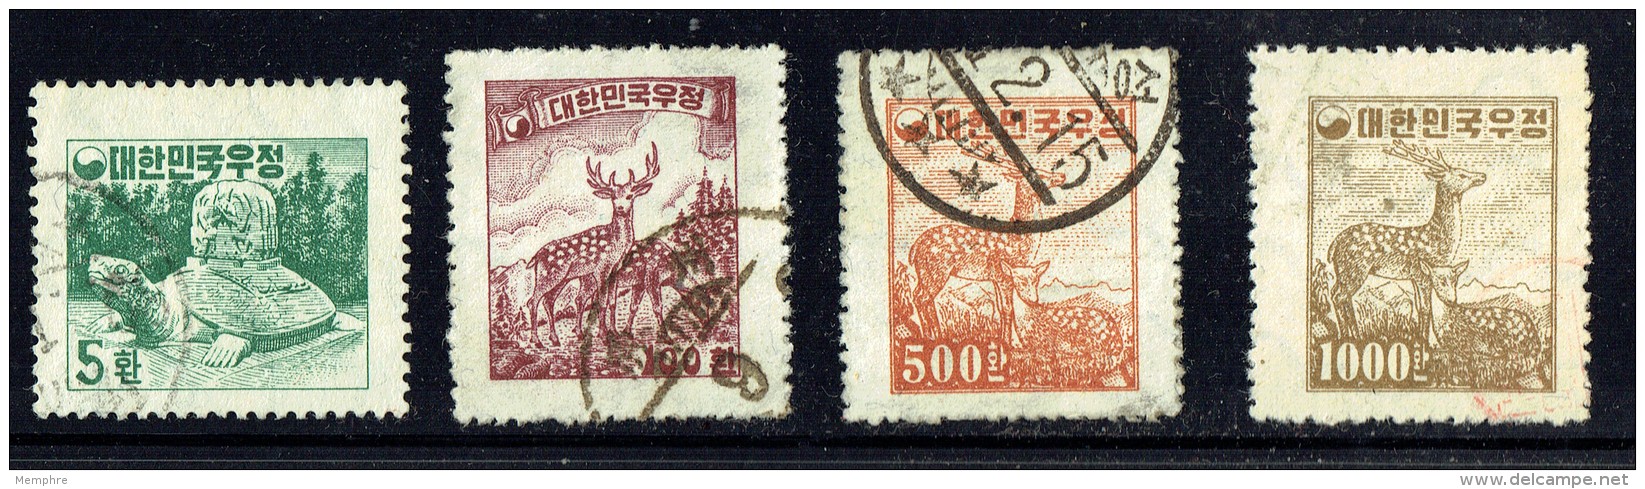 1954  New Definitives  Sc 196-9  Used - Korea, South